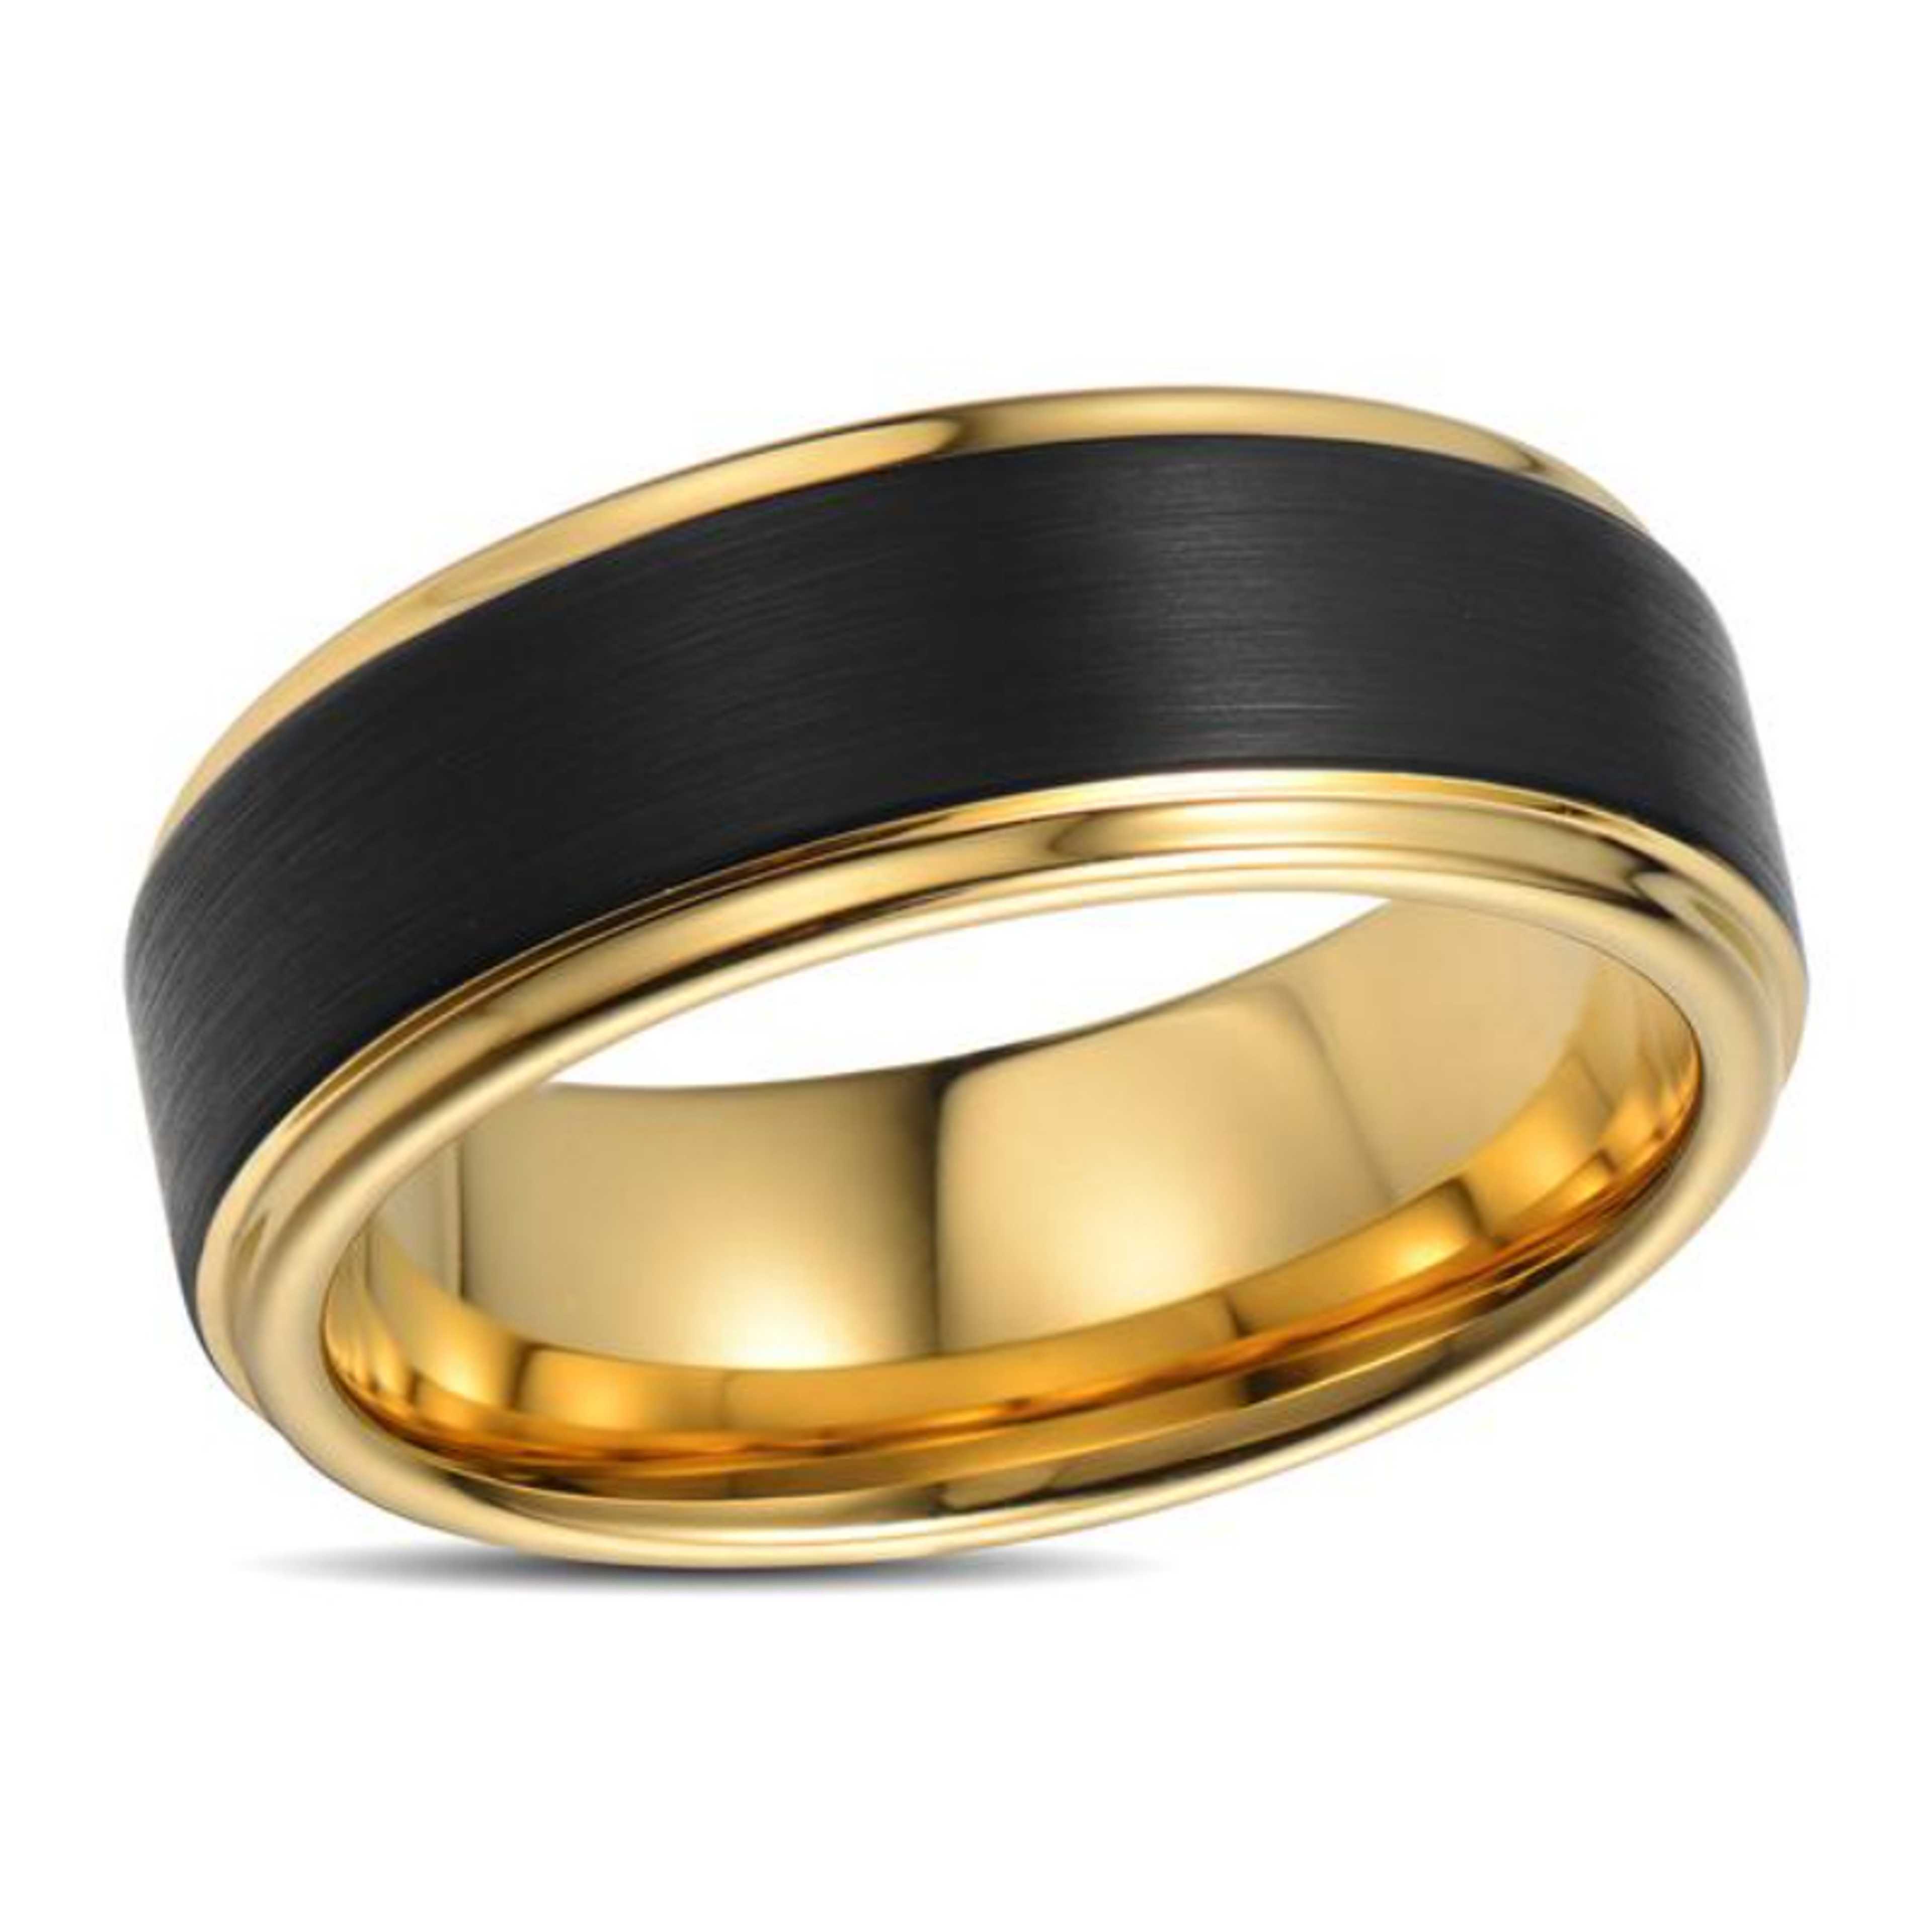 Silver/Golden Stainless Titanium Ring for Men/Women Latest Style